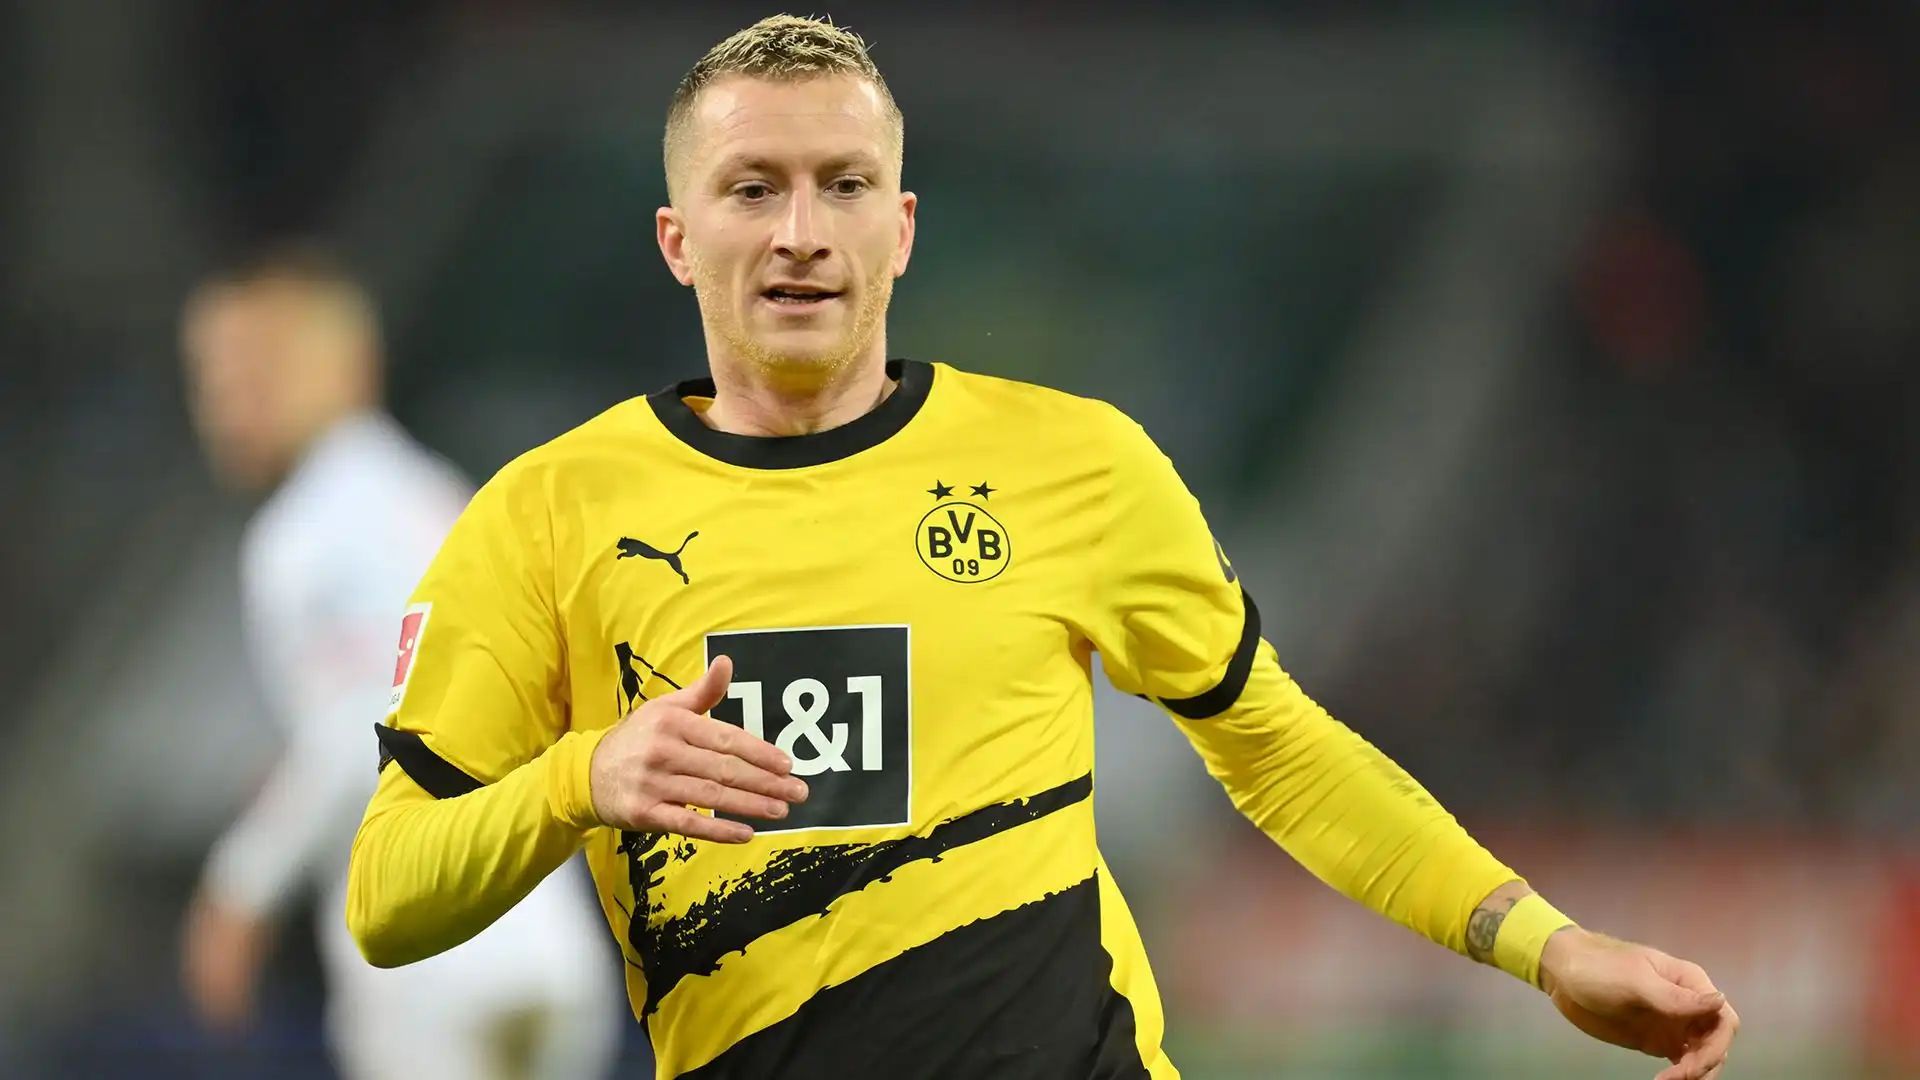 Rimarrà una leggenda del Borussia Dortmund